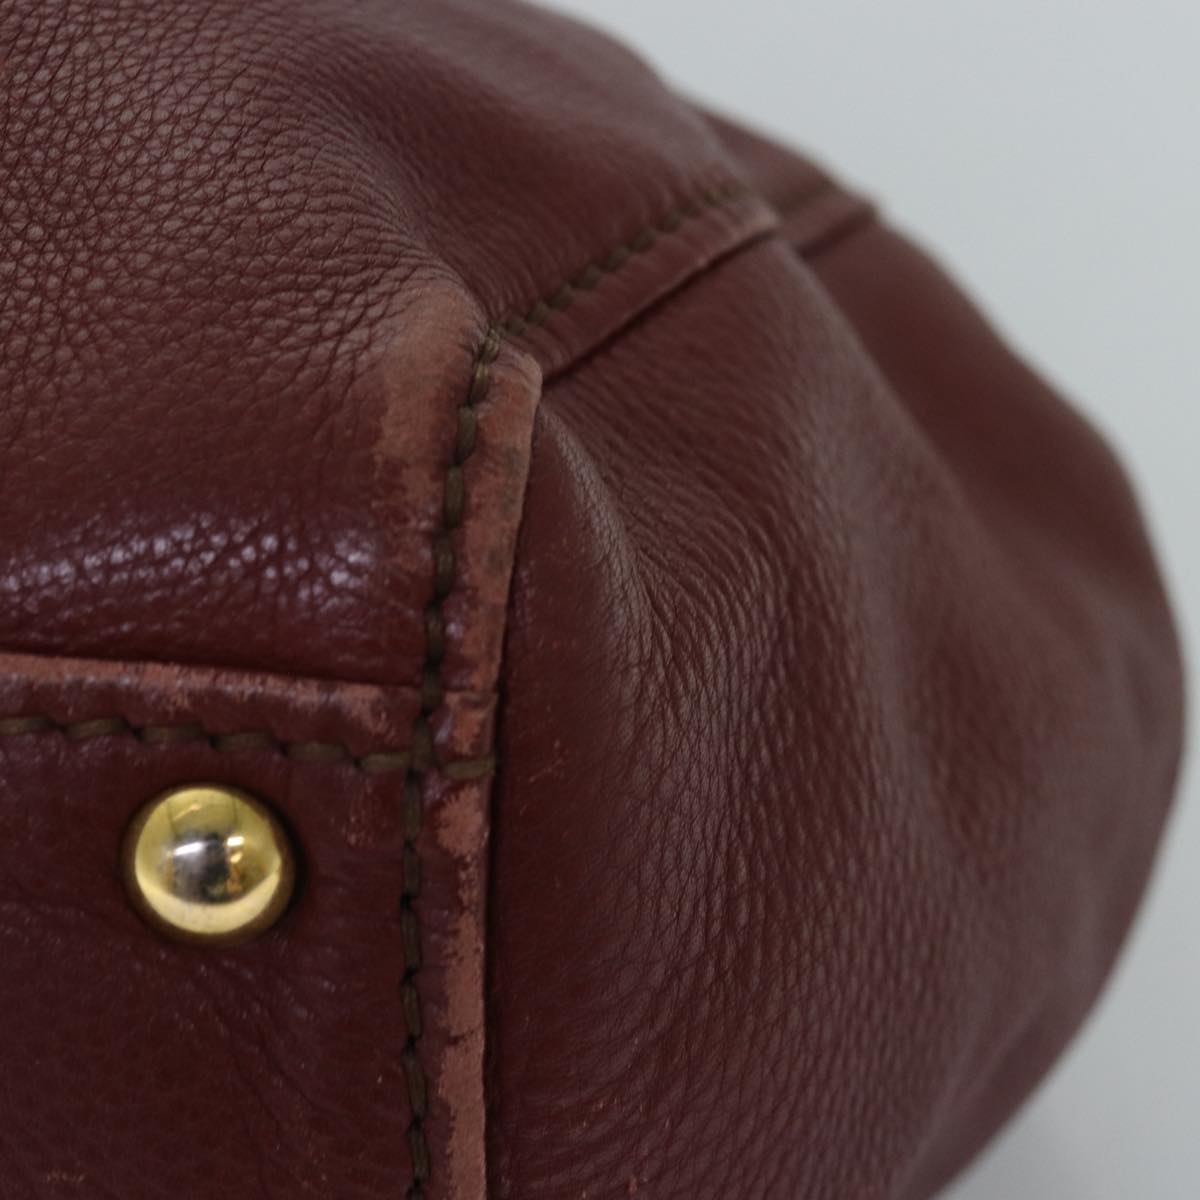 Miu Miu Hand Bag Leather Bordeaux Auth bs14847